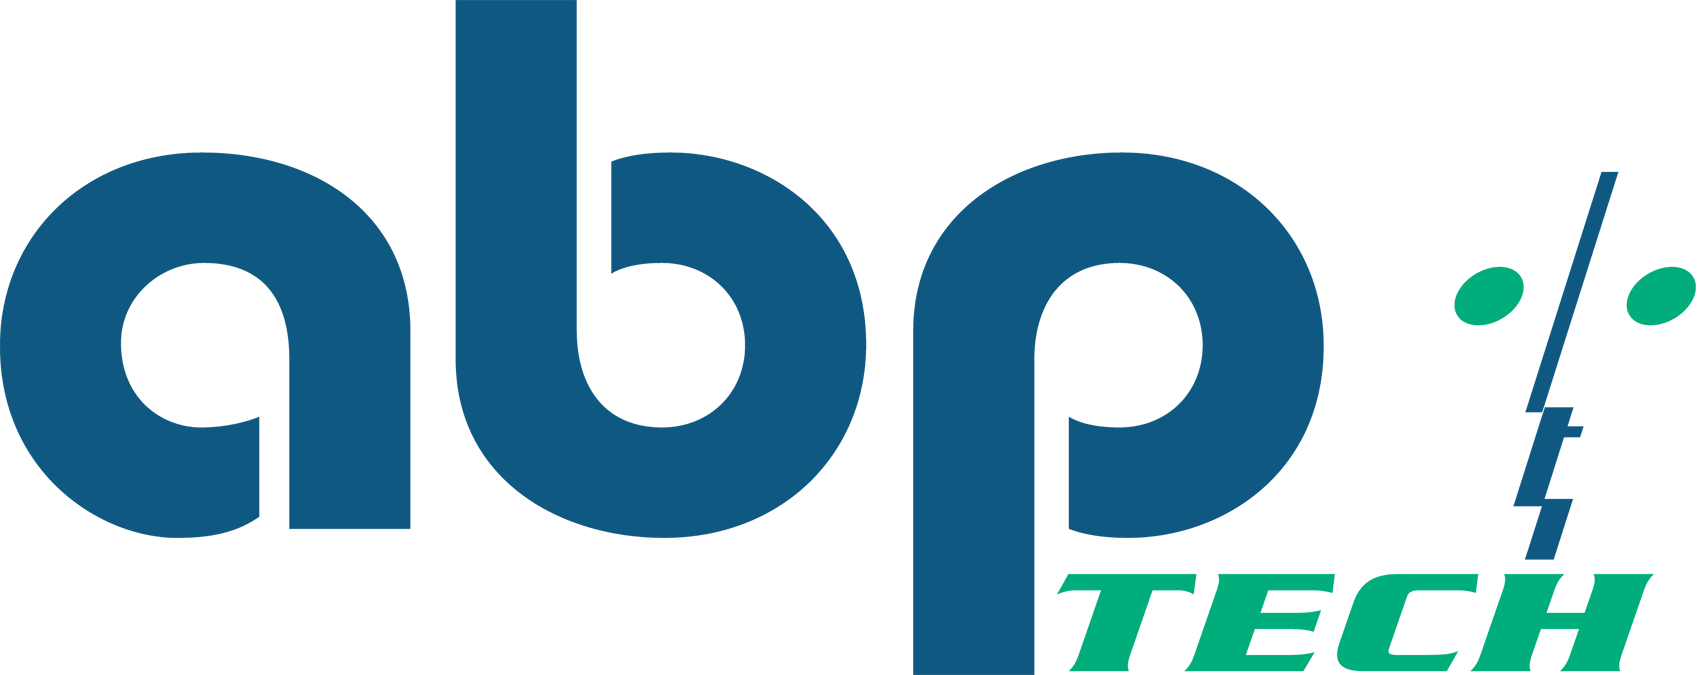 ABP's Partner Store